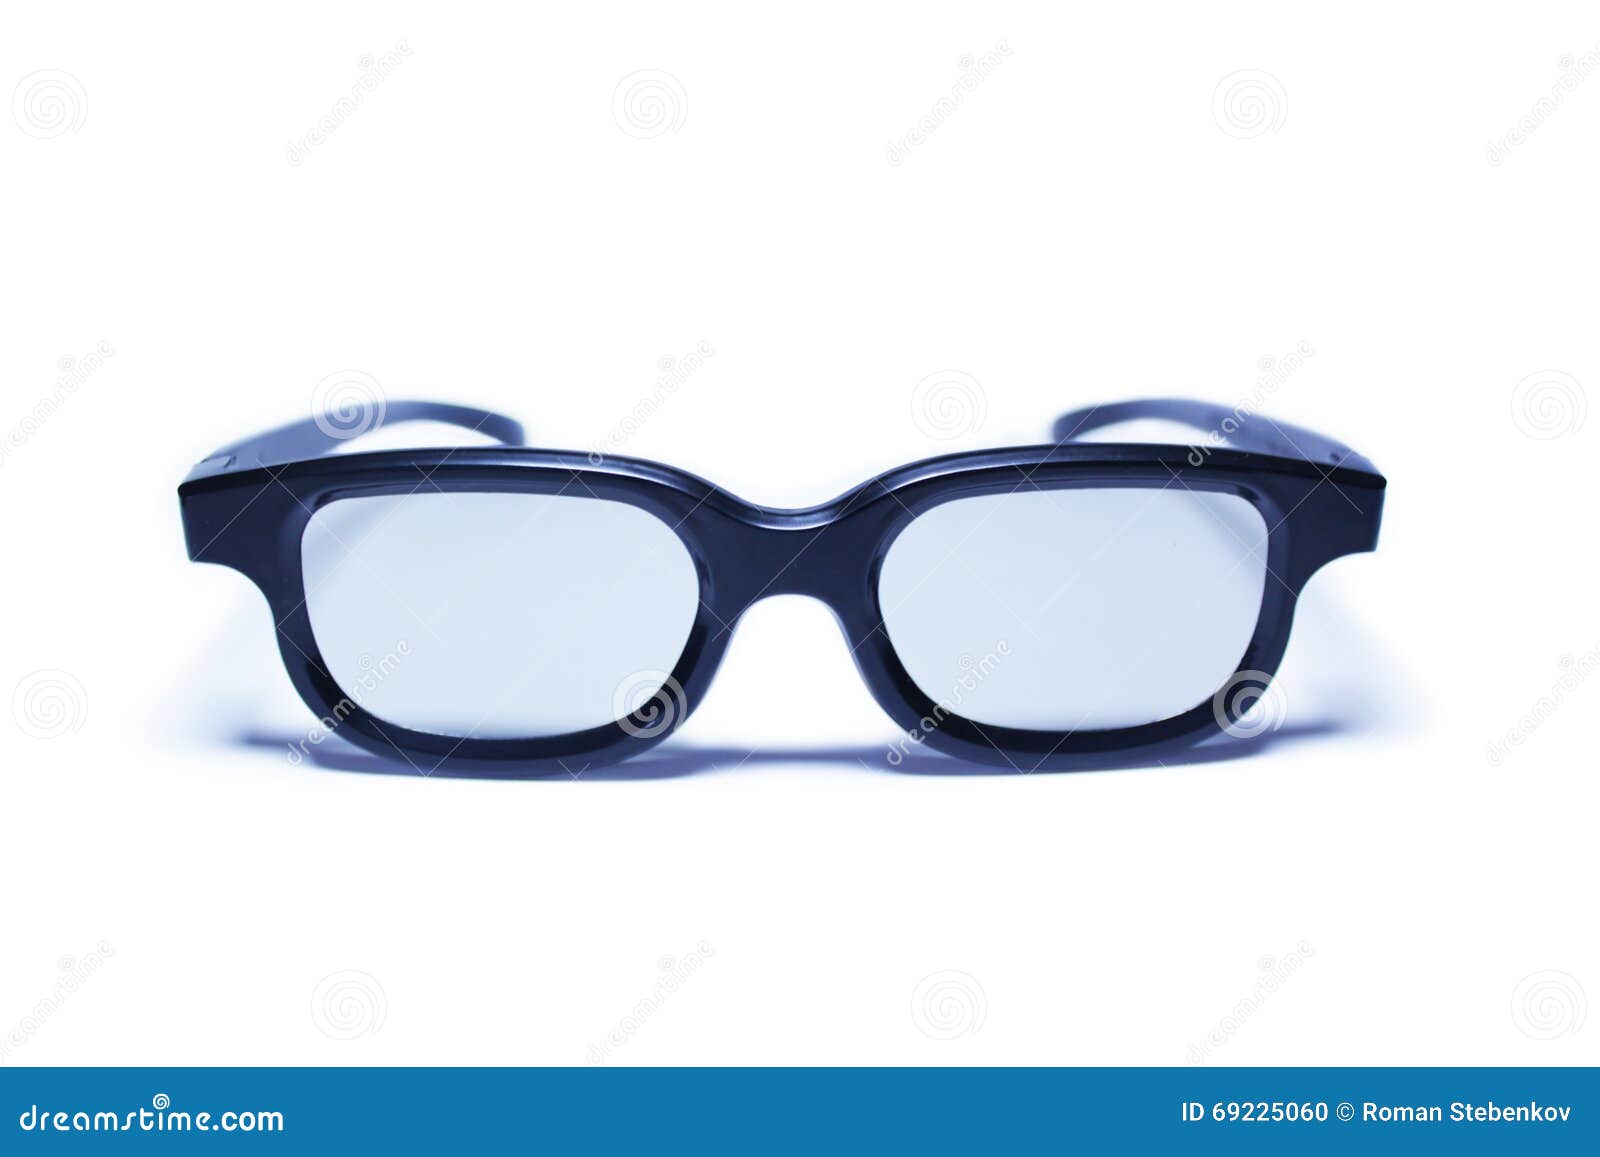 Polarized 3d glasses stock photo. Image of illusion, dimension - 69225060